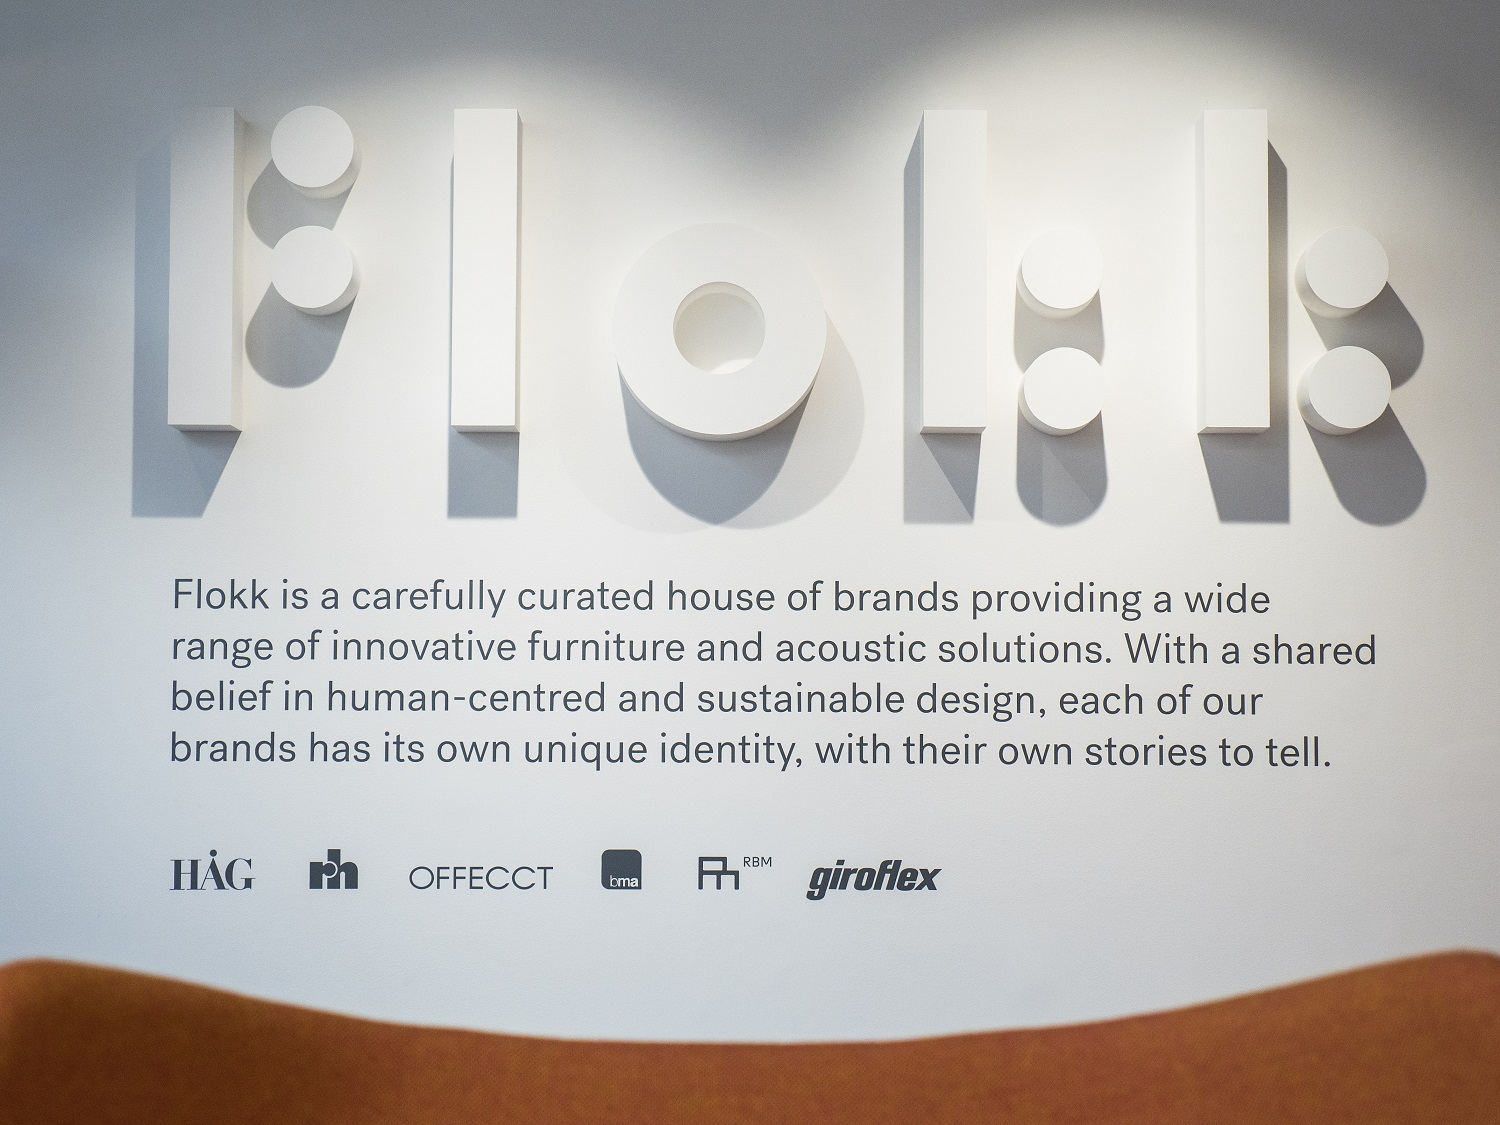 UK Flokk showroom with Flokk mission statement on wall